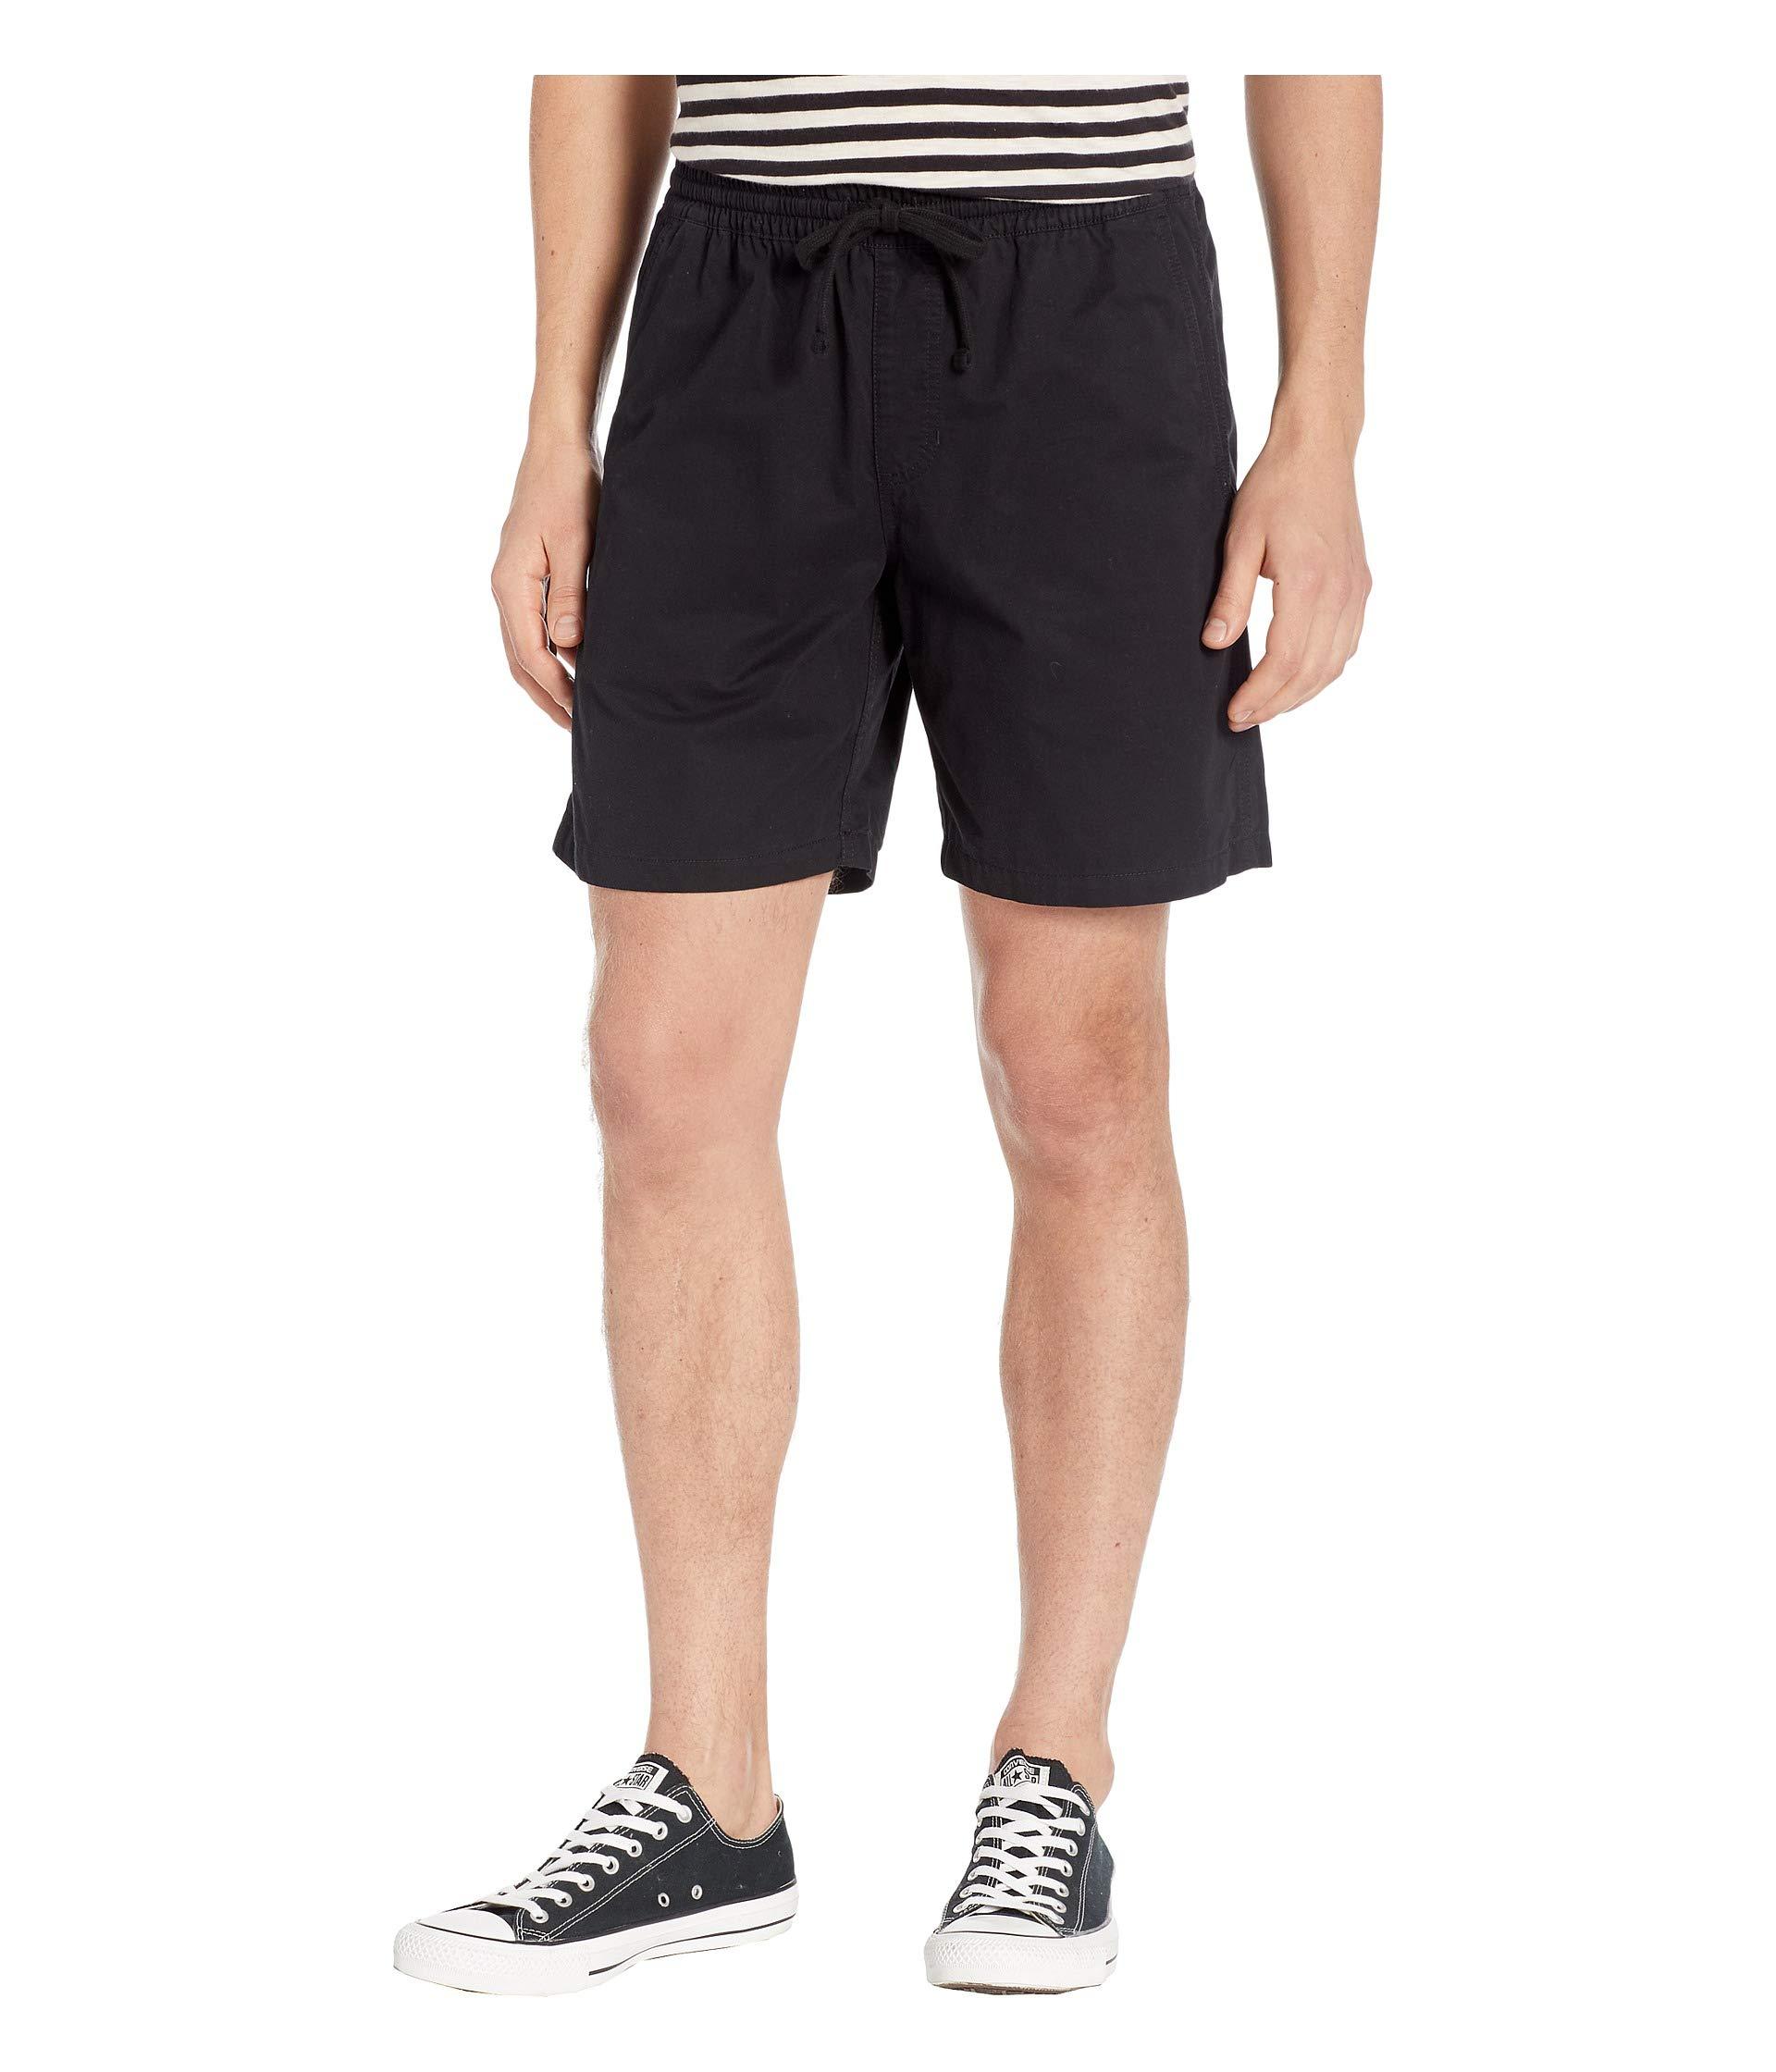 Lyst - Vans Range Shorts 18 (checkerboard) Men's Shorts in Black for Men